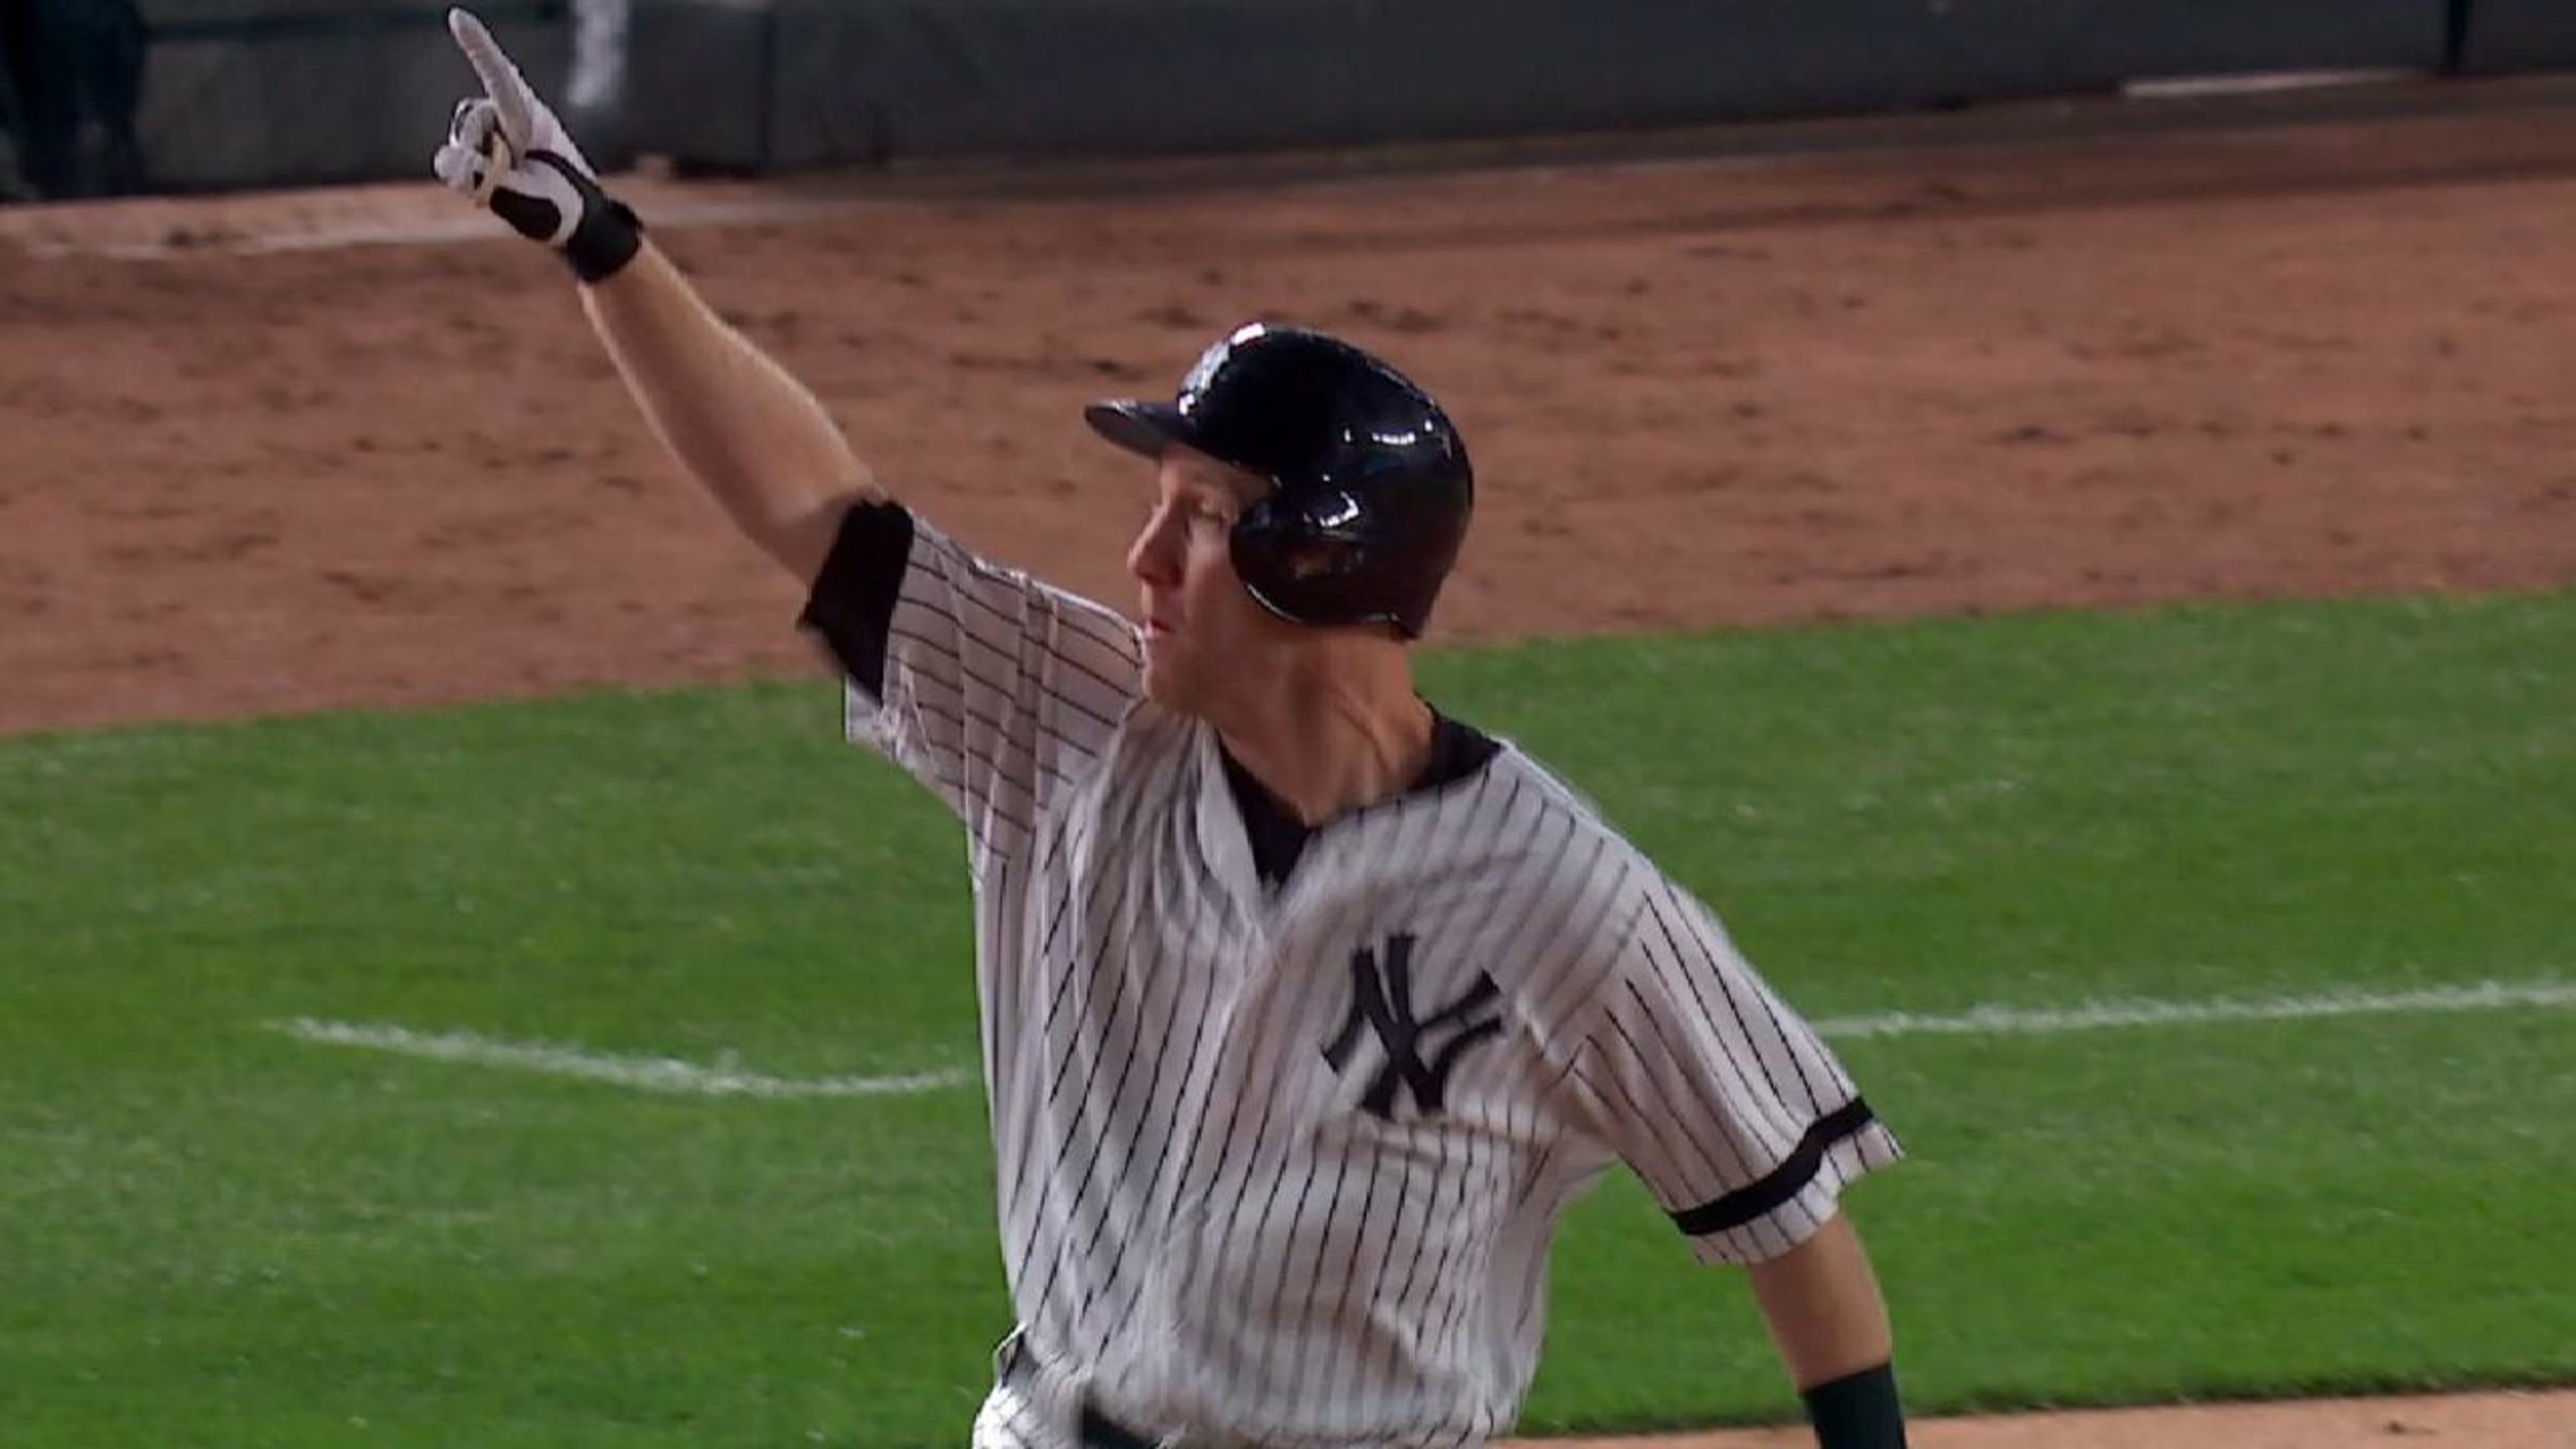 Todd Frazier threw his bat at the ball and hit a three-run homer